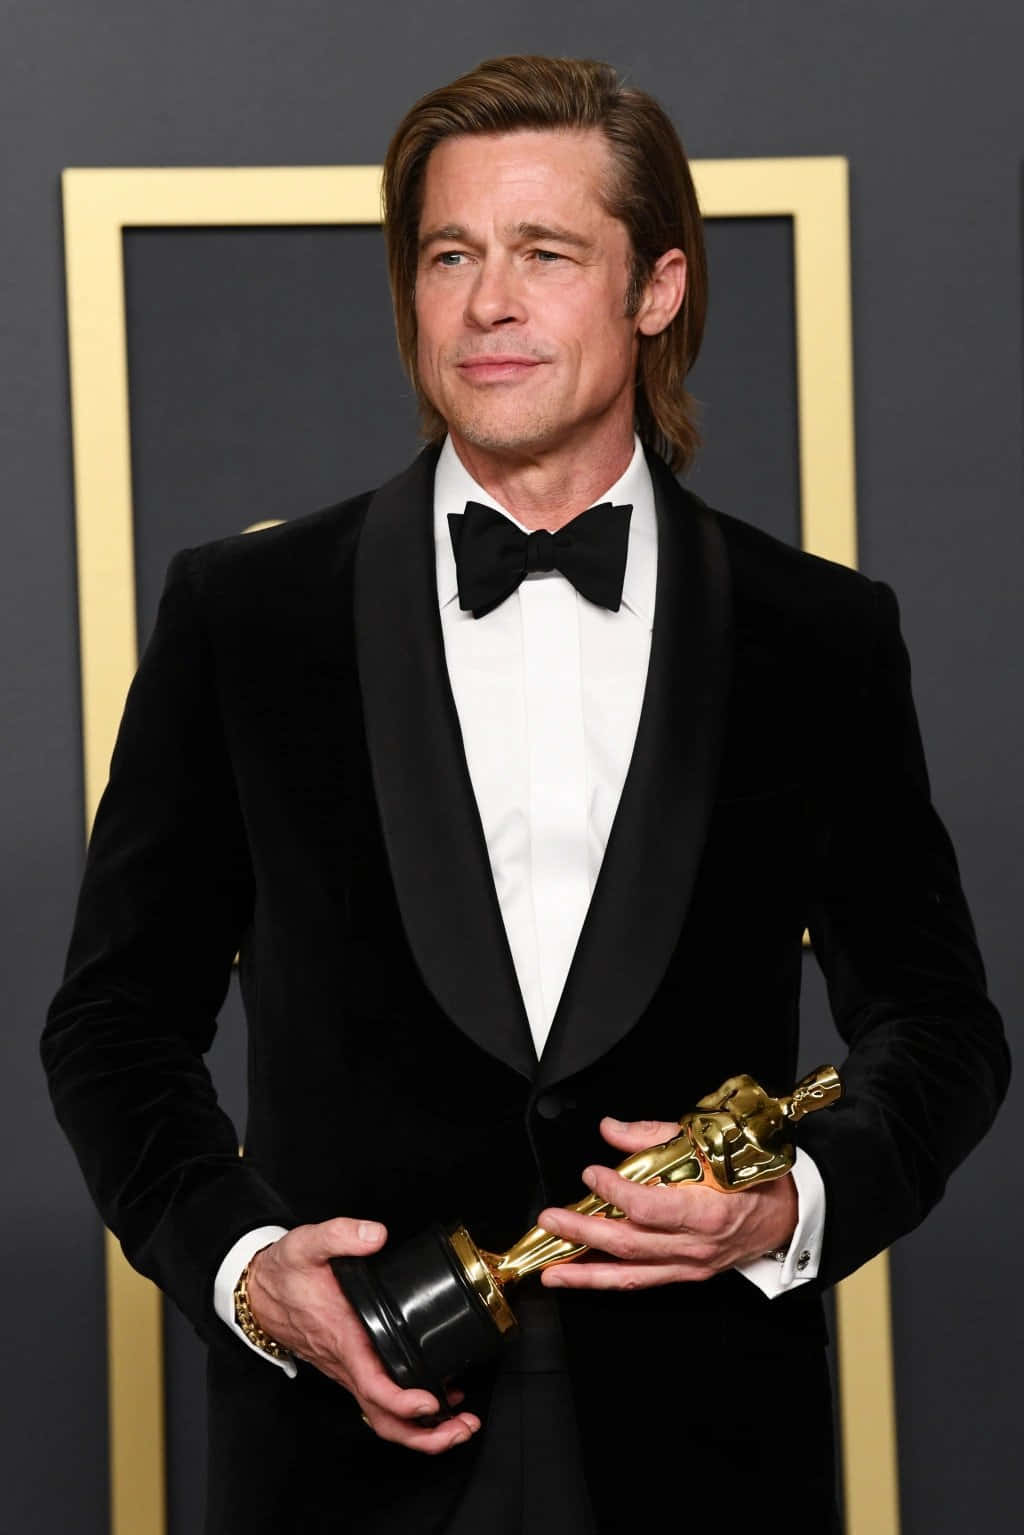 Brad Pitt wears a striped shirt while looking dapper